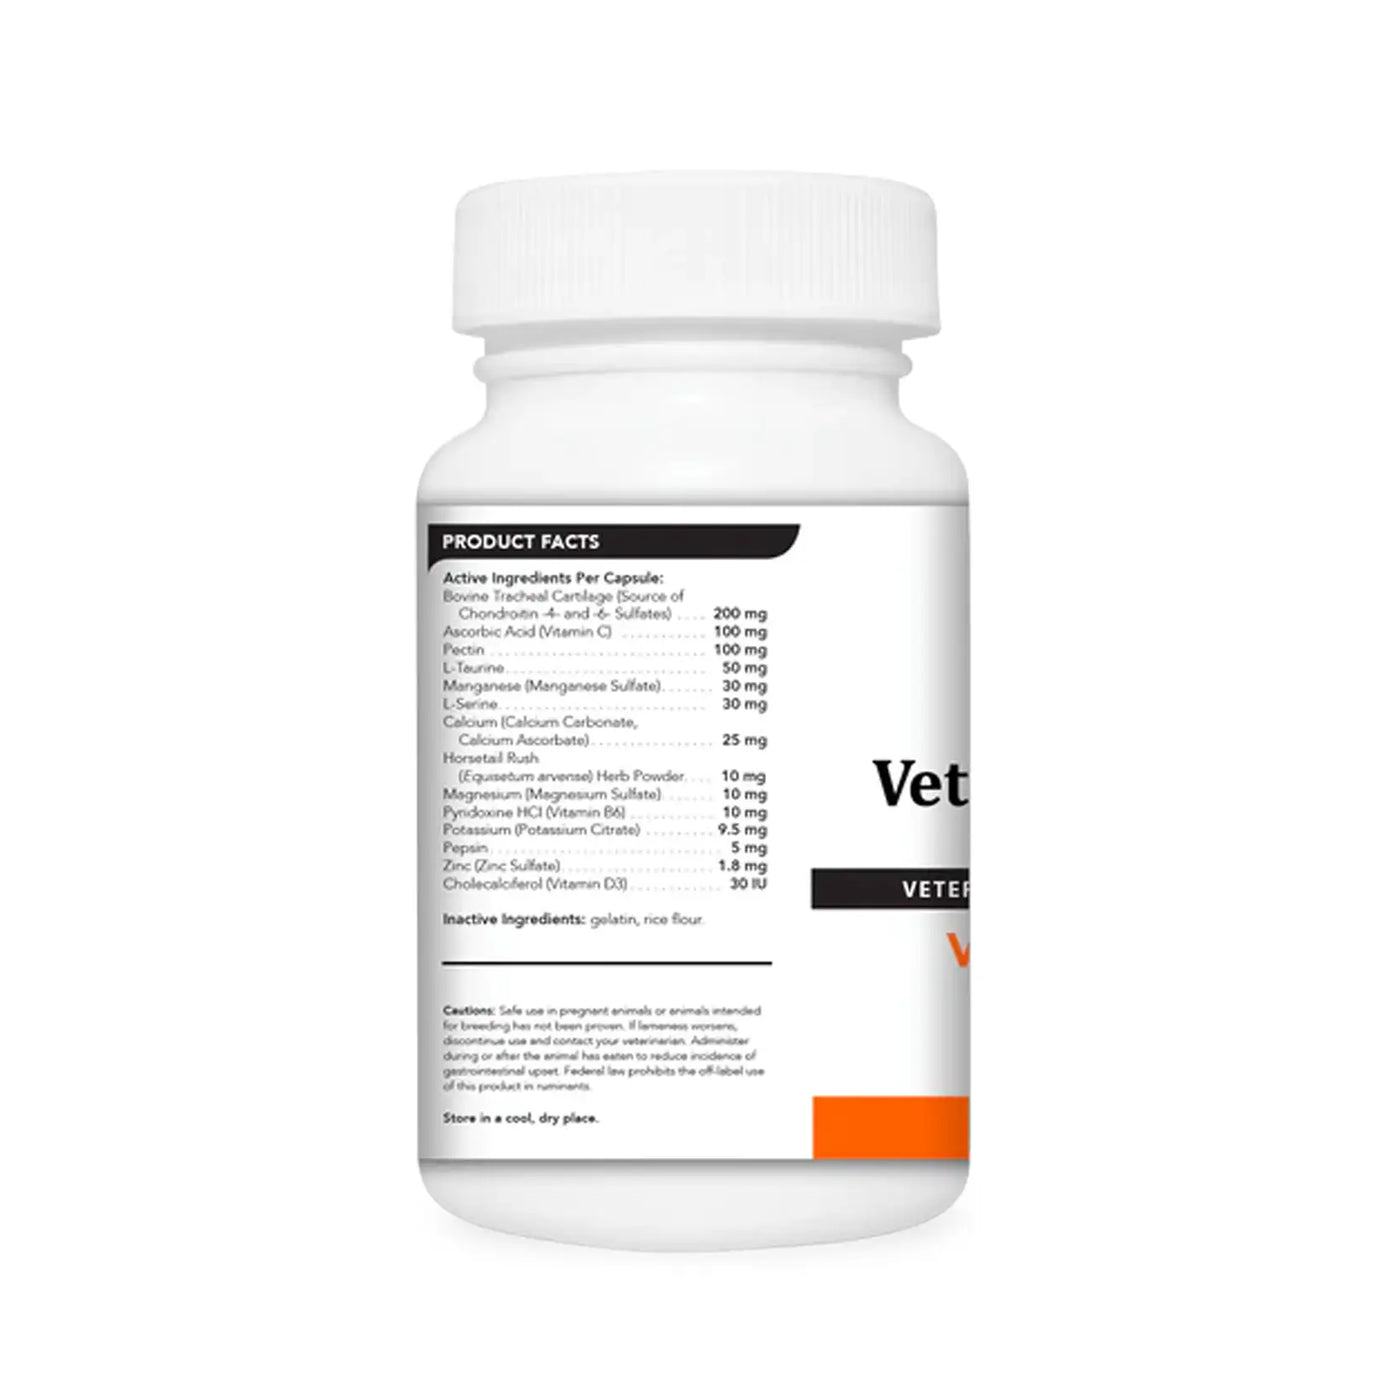 VetriScience - Vetri Disc 犬用脊椎寶關節健康膠囊180粒